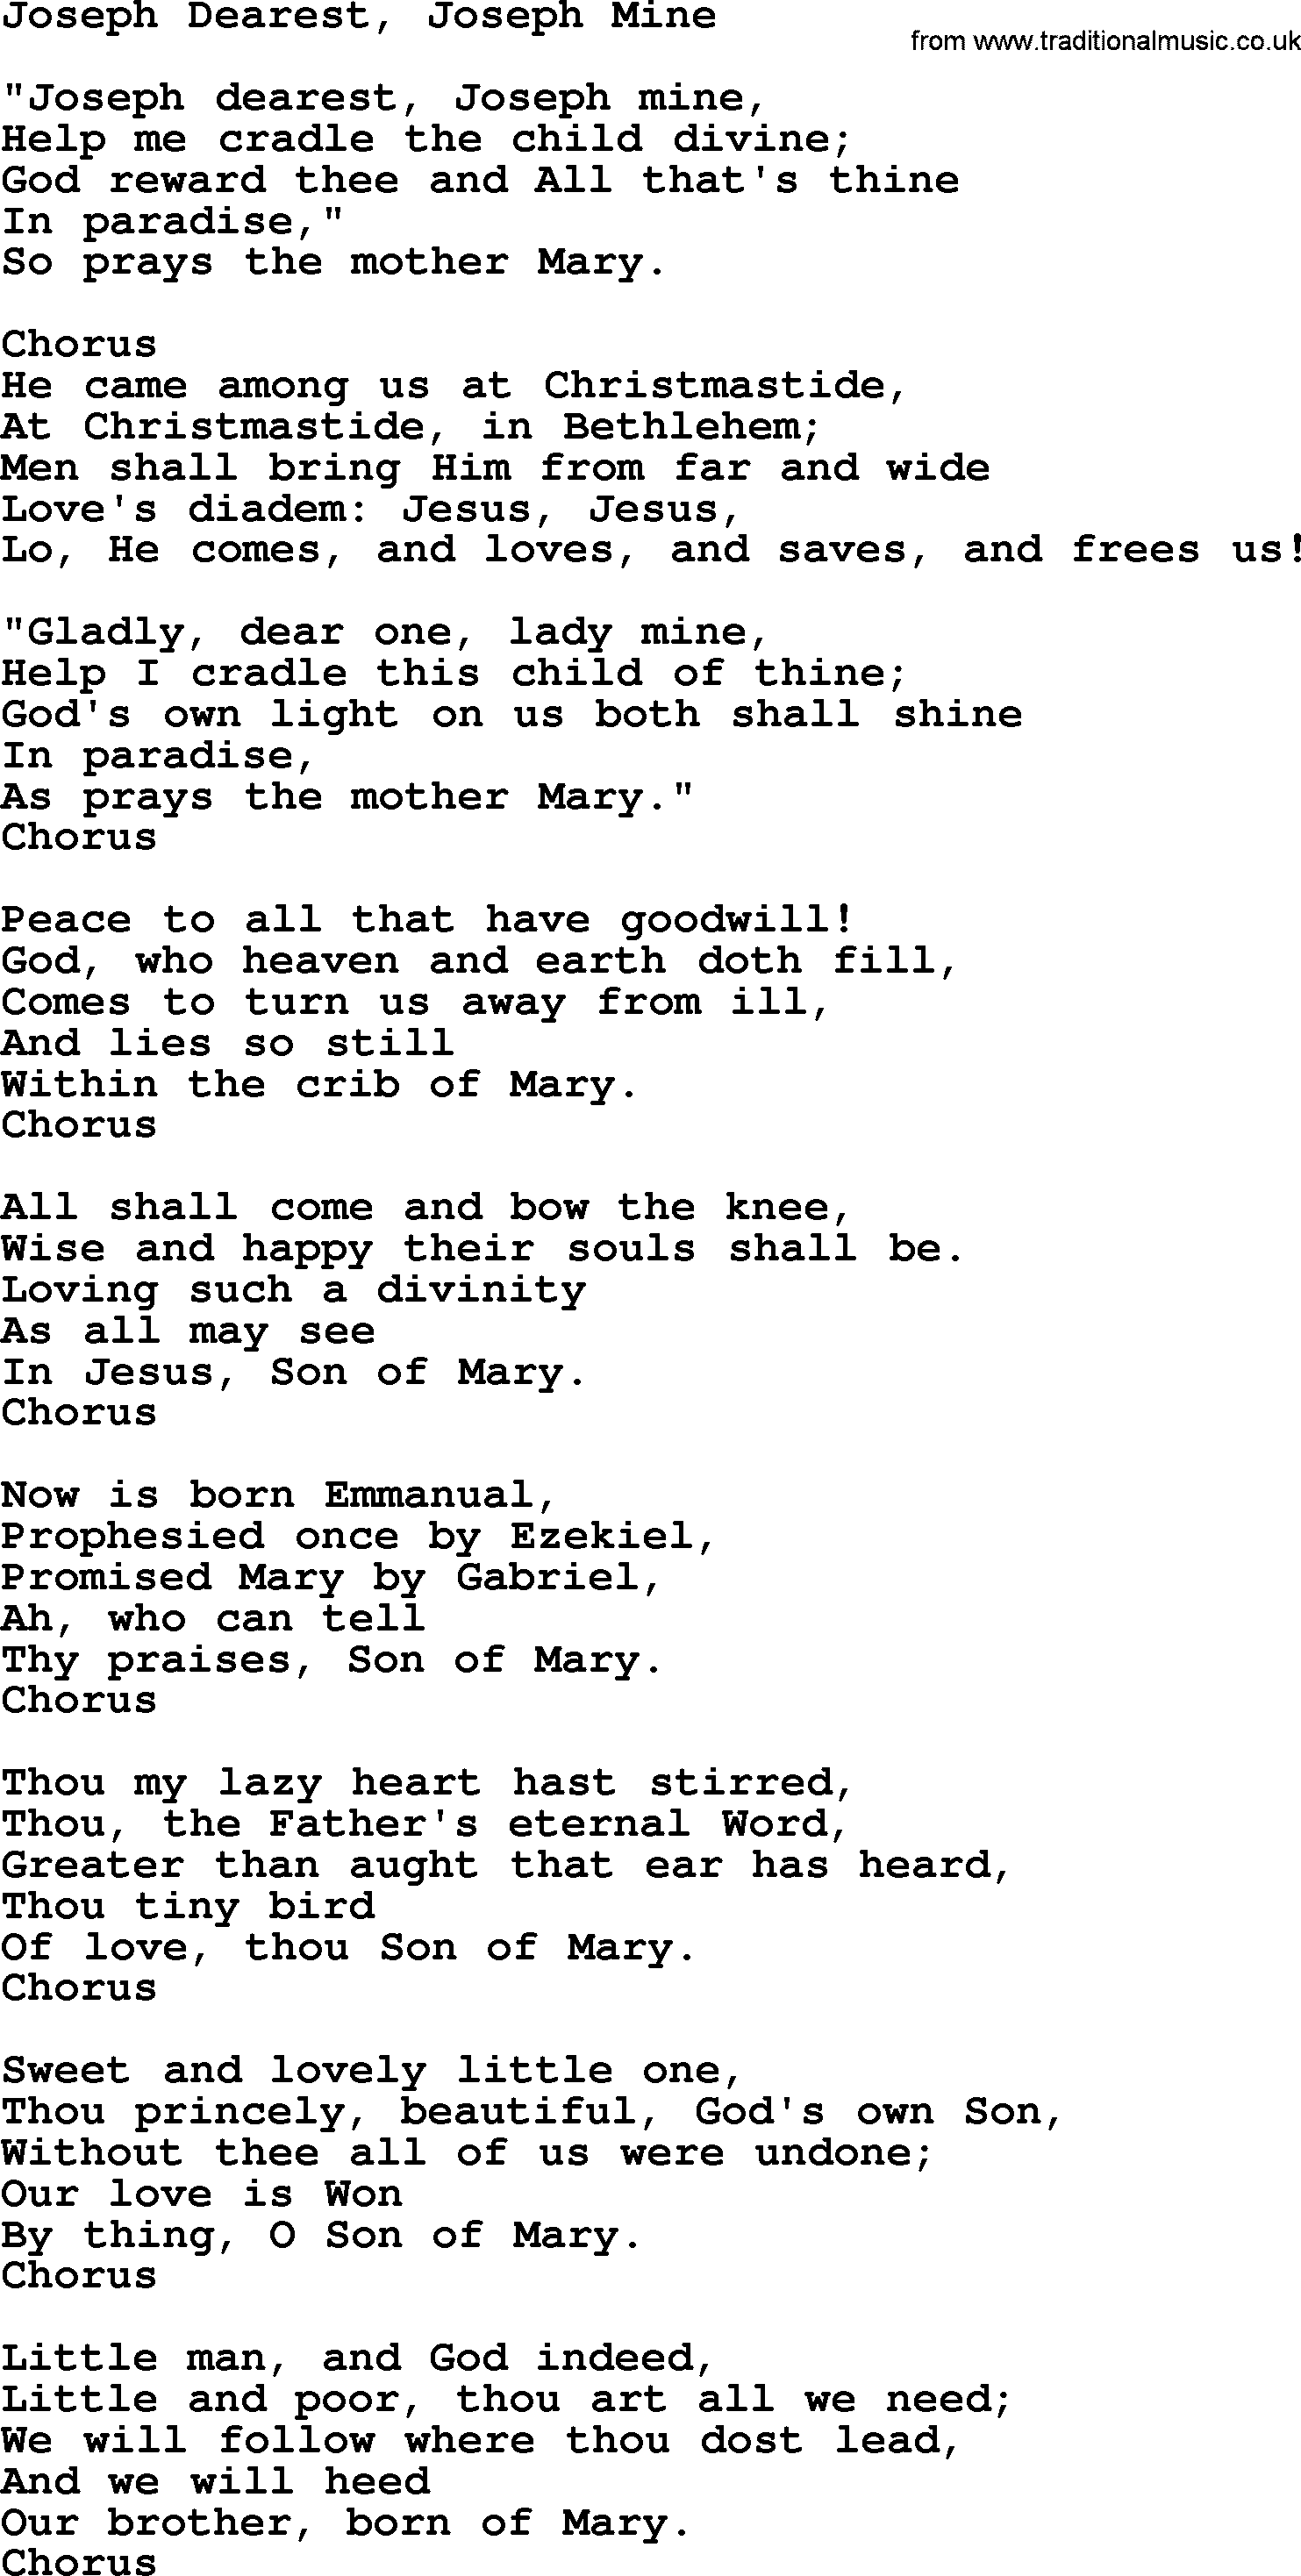 Christmas Hymns, Carols and Songs, title: Joseph Dearest, Joseph Mine, lyrics with PDF